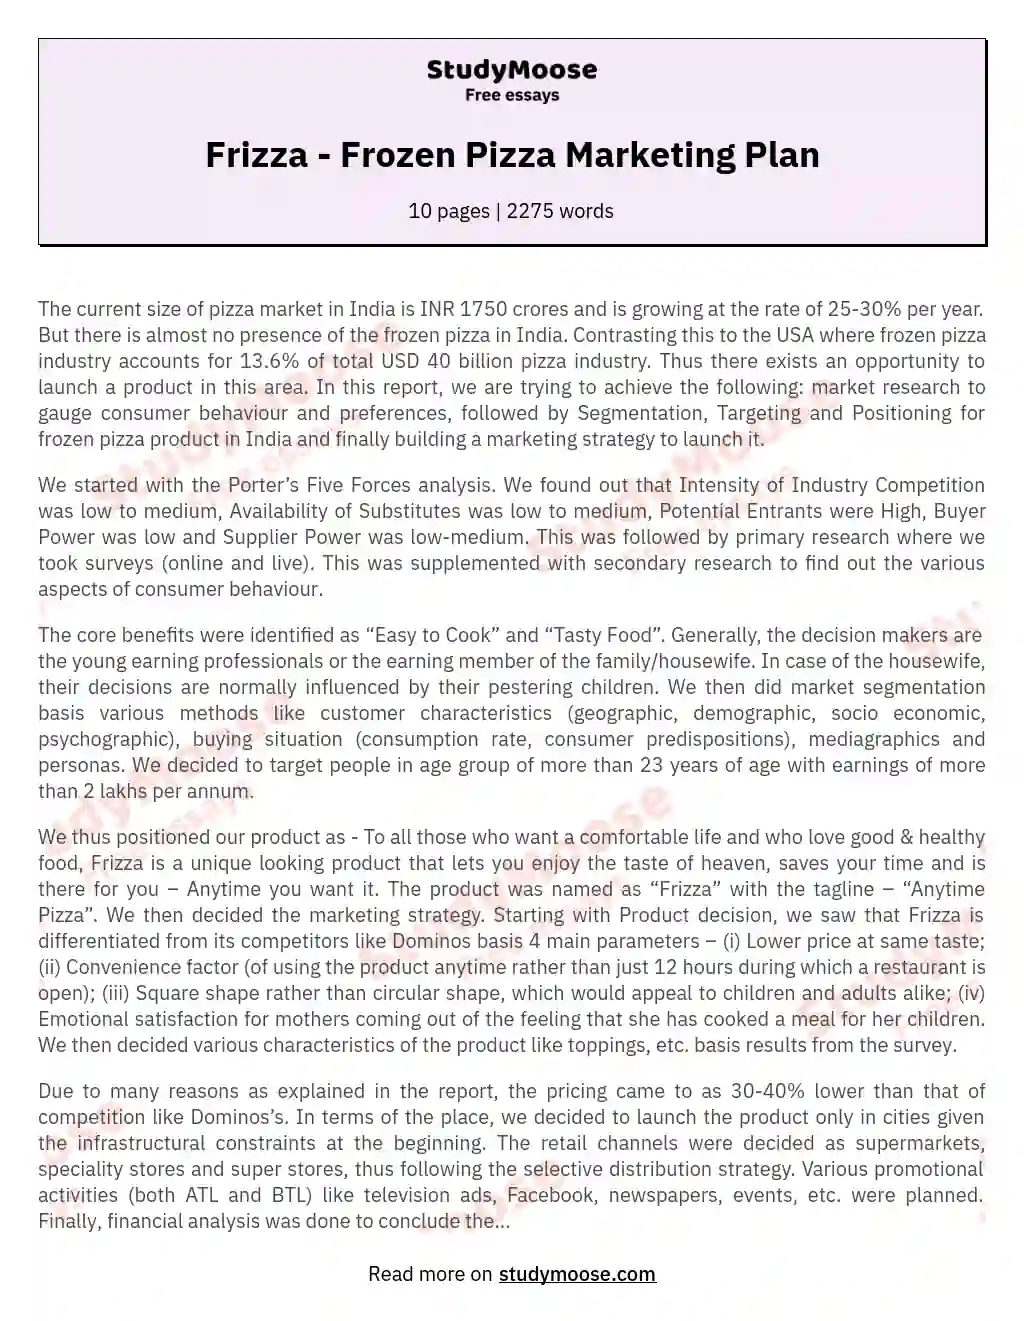 frozen pizza business plan